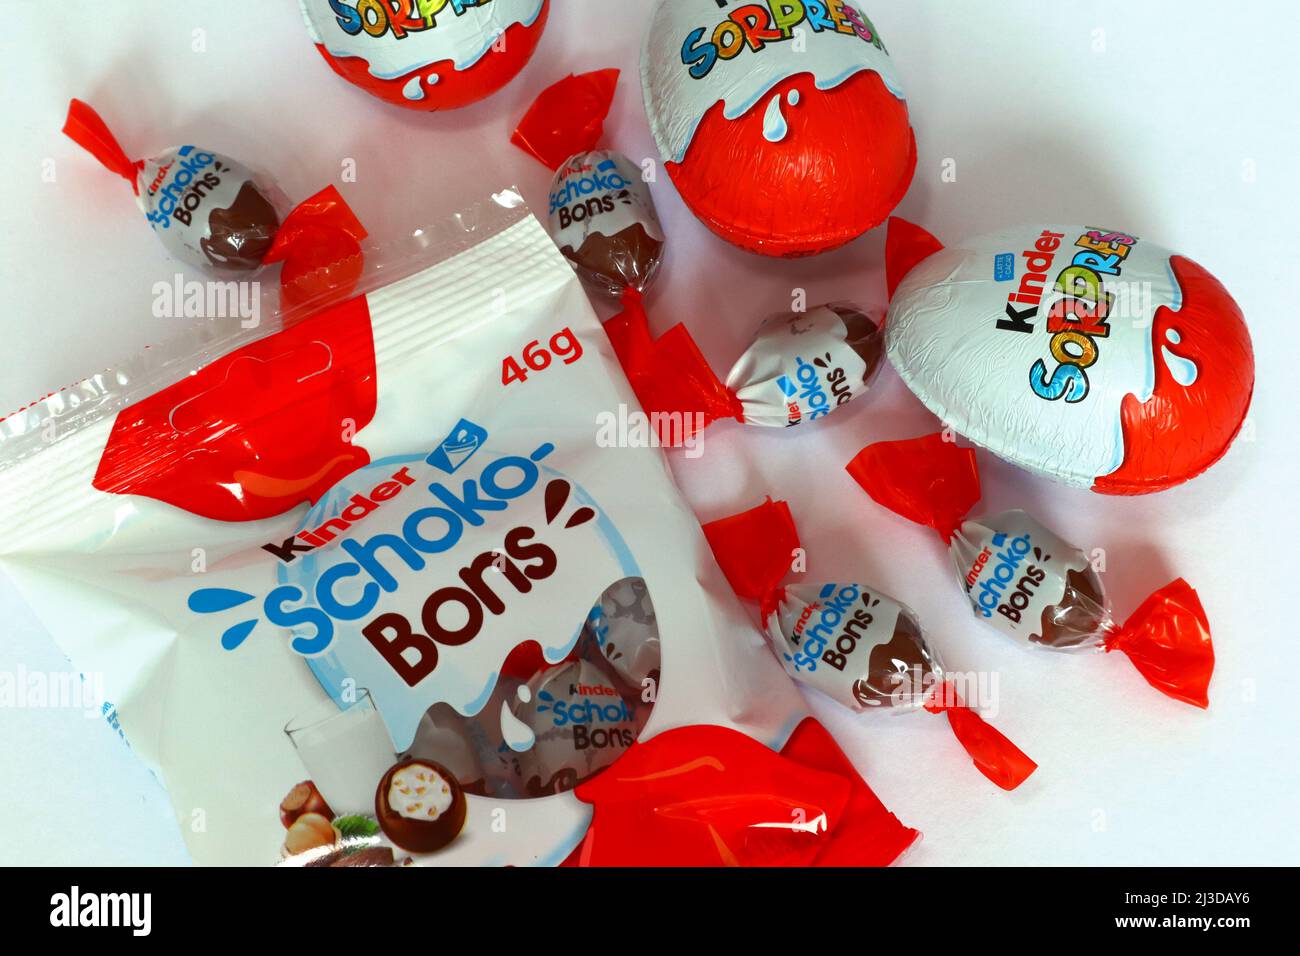 Ferrero Kinder Schoko Bons - Chocolate Candy